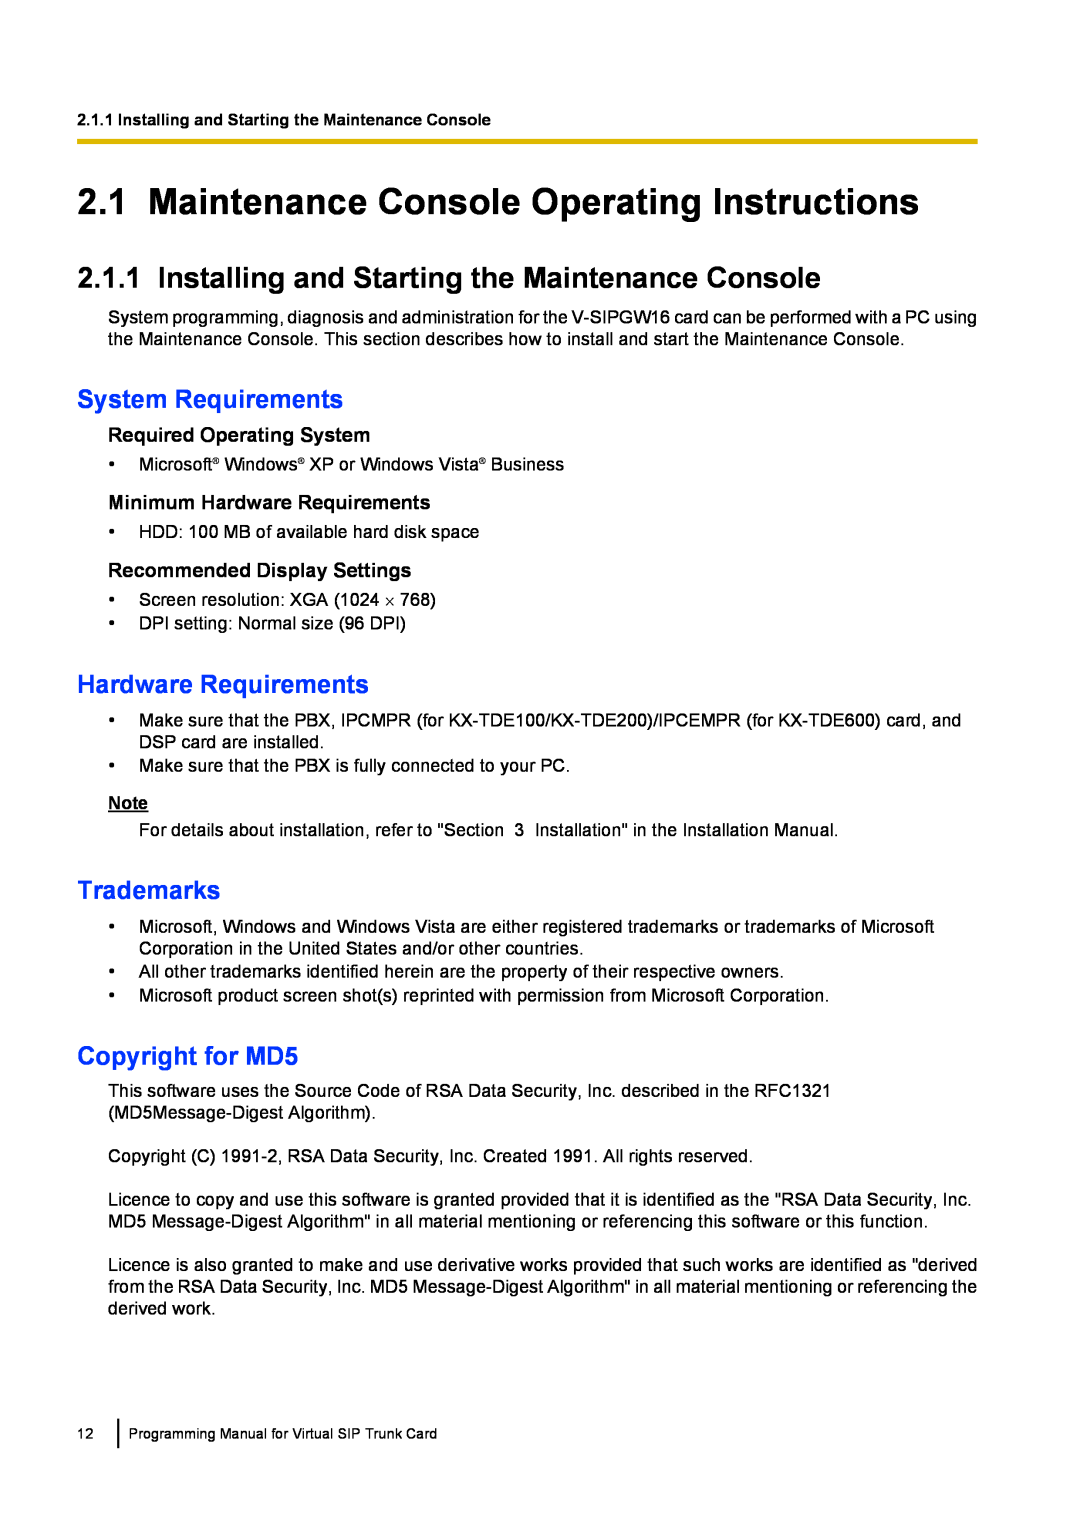 Panasonic KX-TDE100 manual Maintenance Console Operating Instructions, Installing and Starting the Maintenance Console 